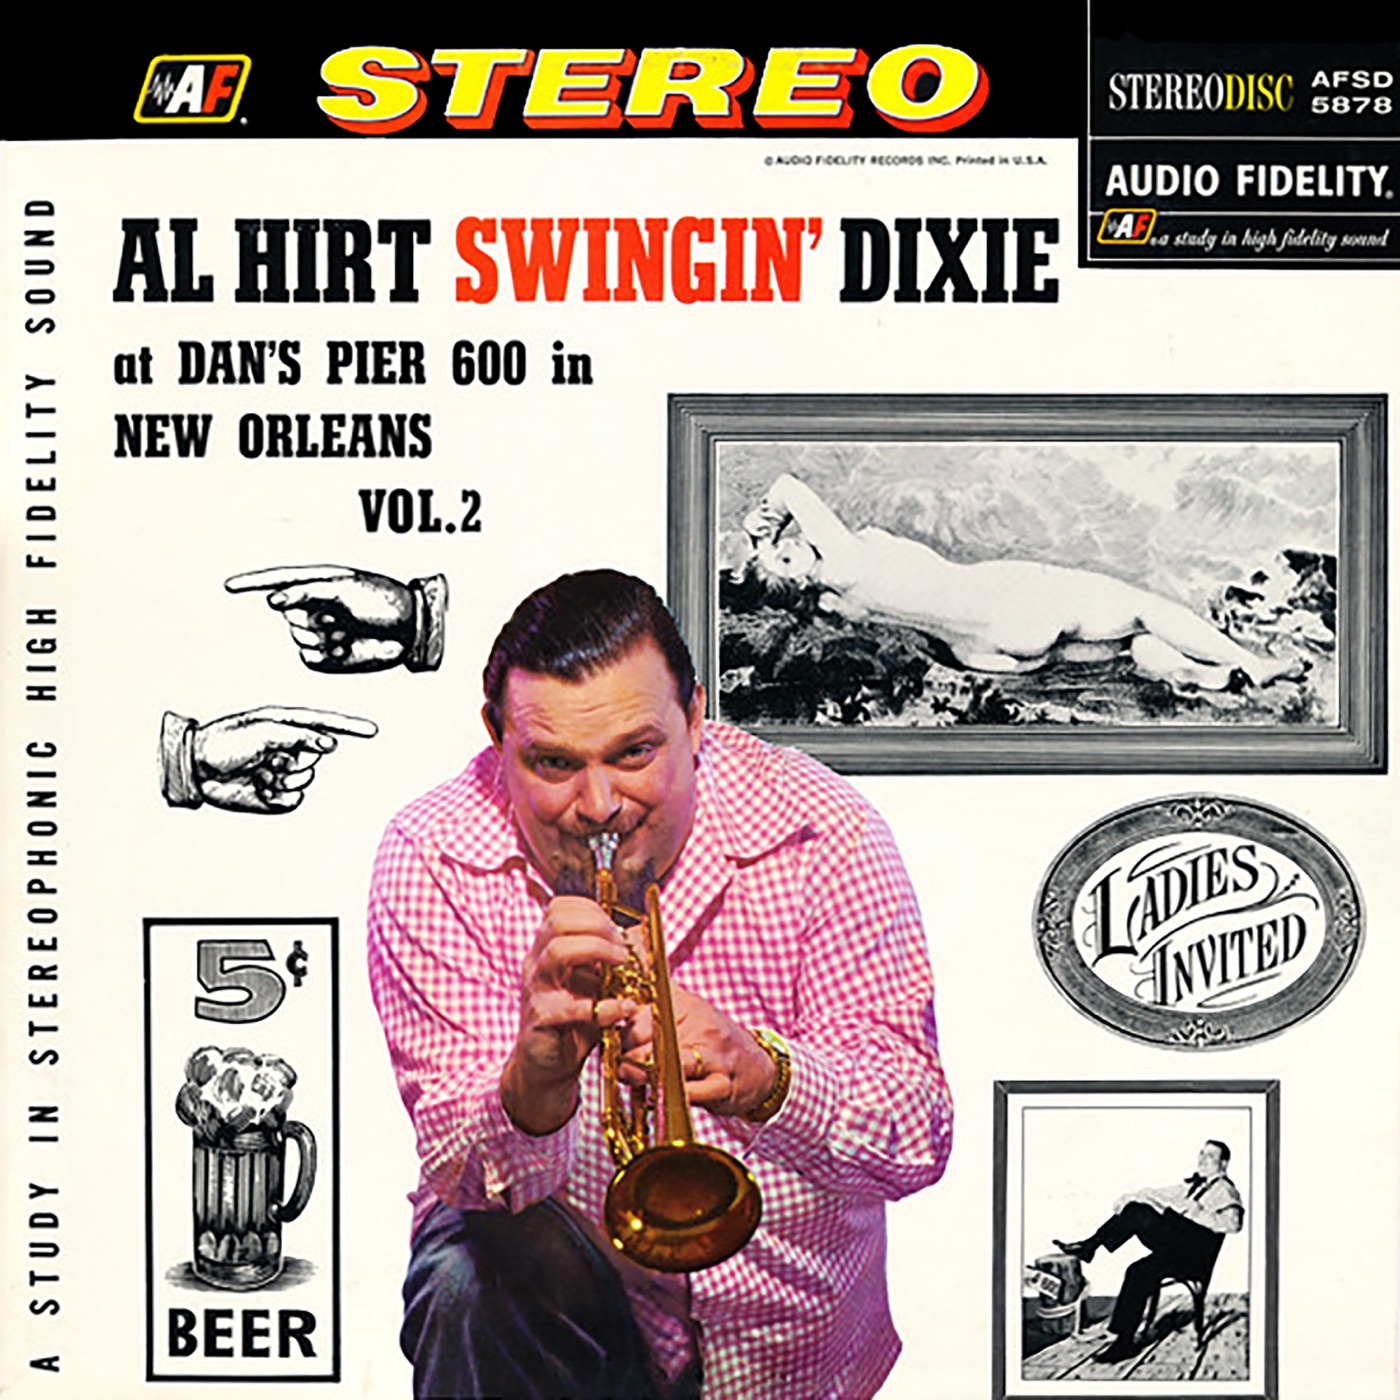 Swingin' Dixie! at Dan's Pier 600 in New Orleans, Vol. 2 by Al Hirt